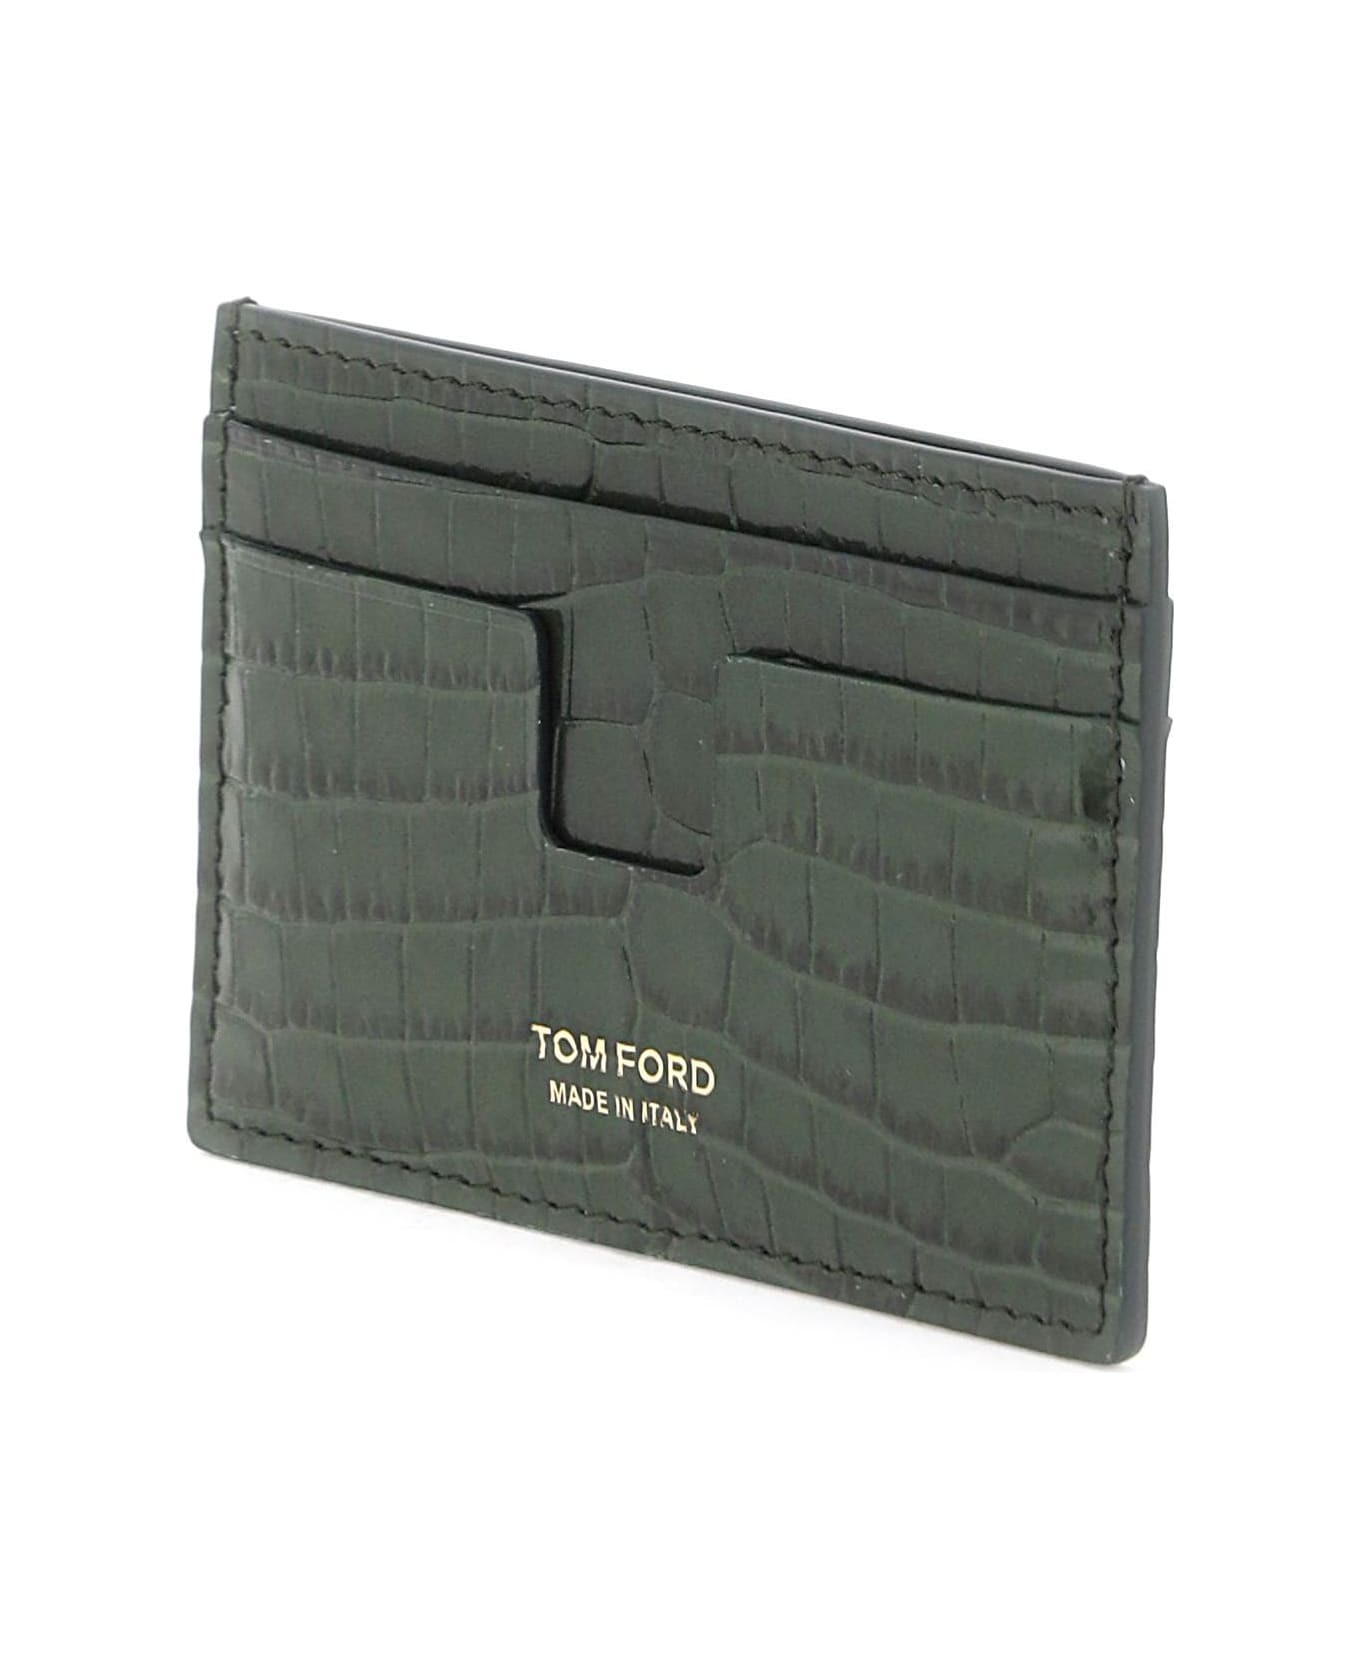 Tom Ford 4 Slots Crocodile Green Wallet - RIFLE GREEN (Green)